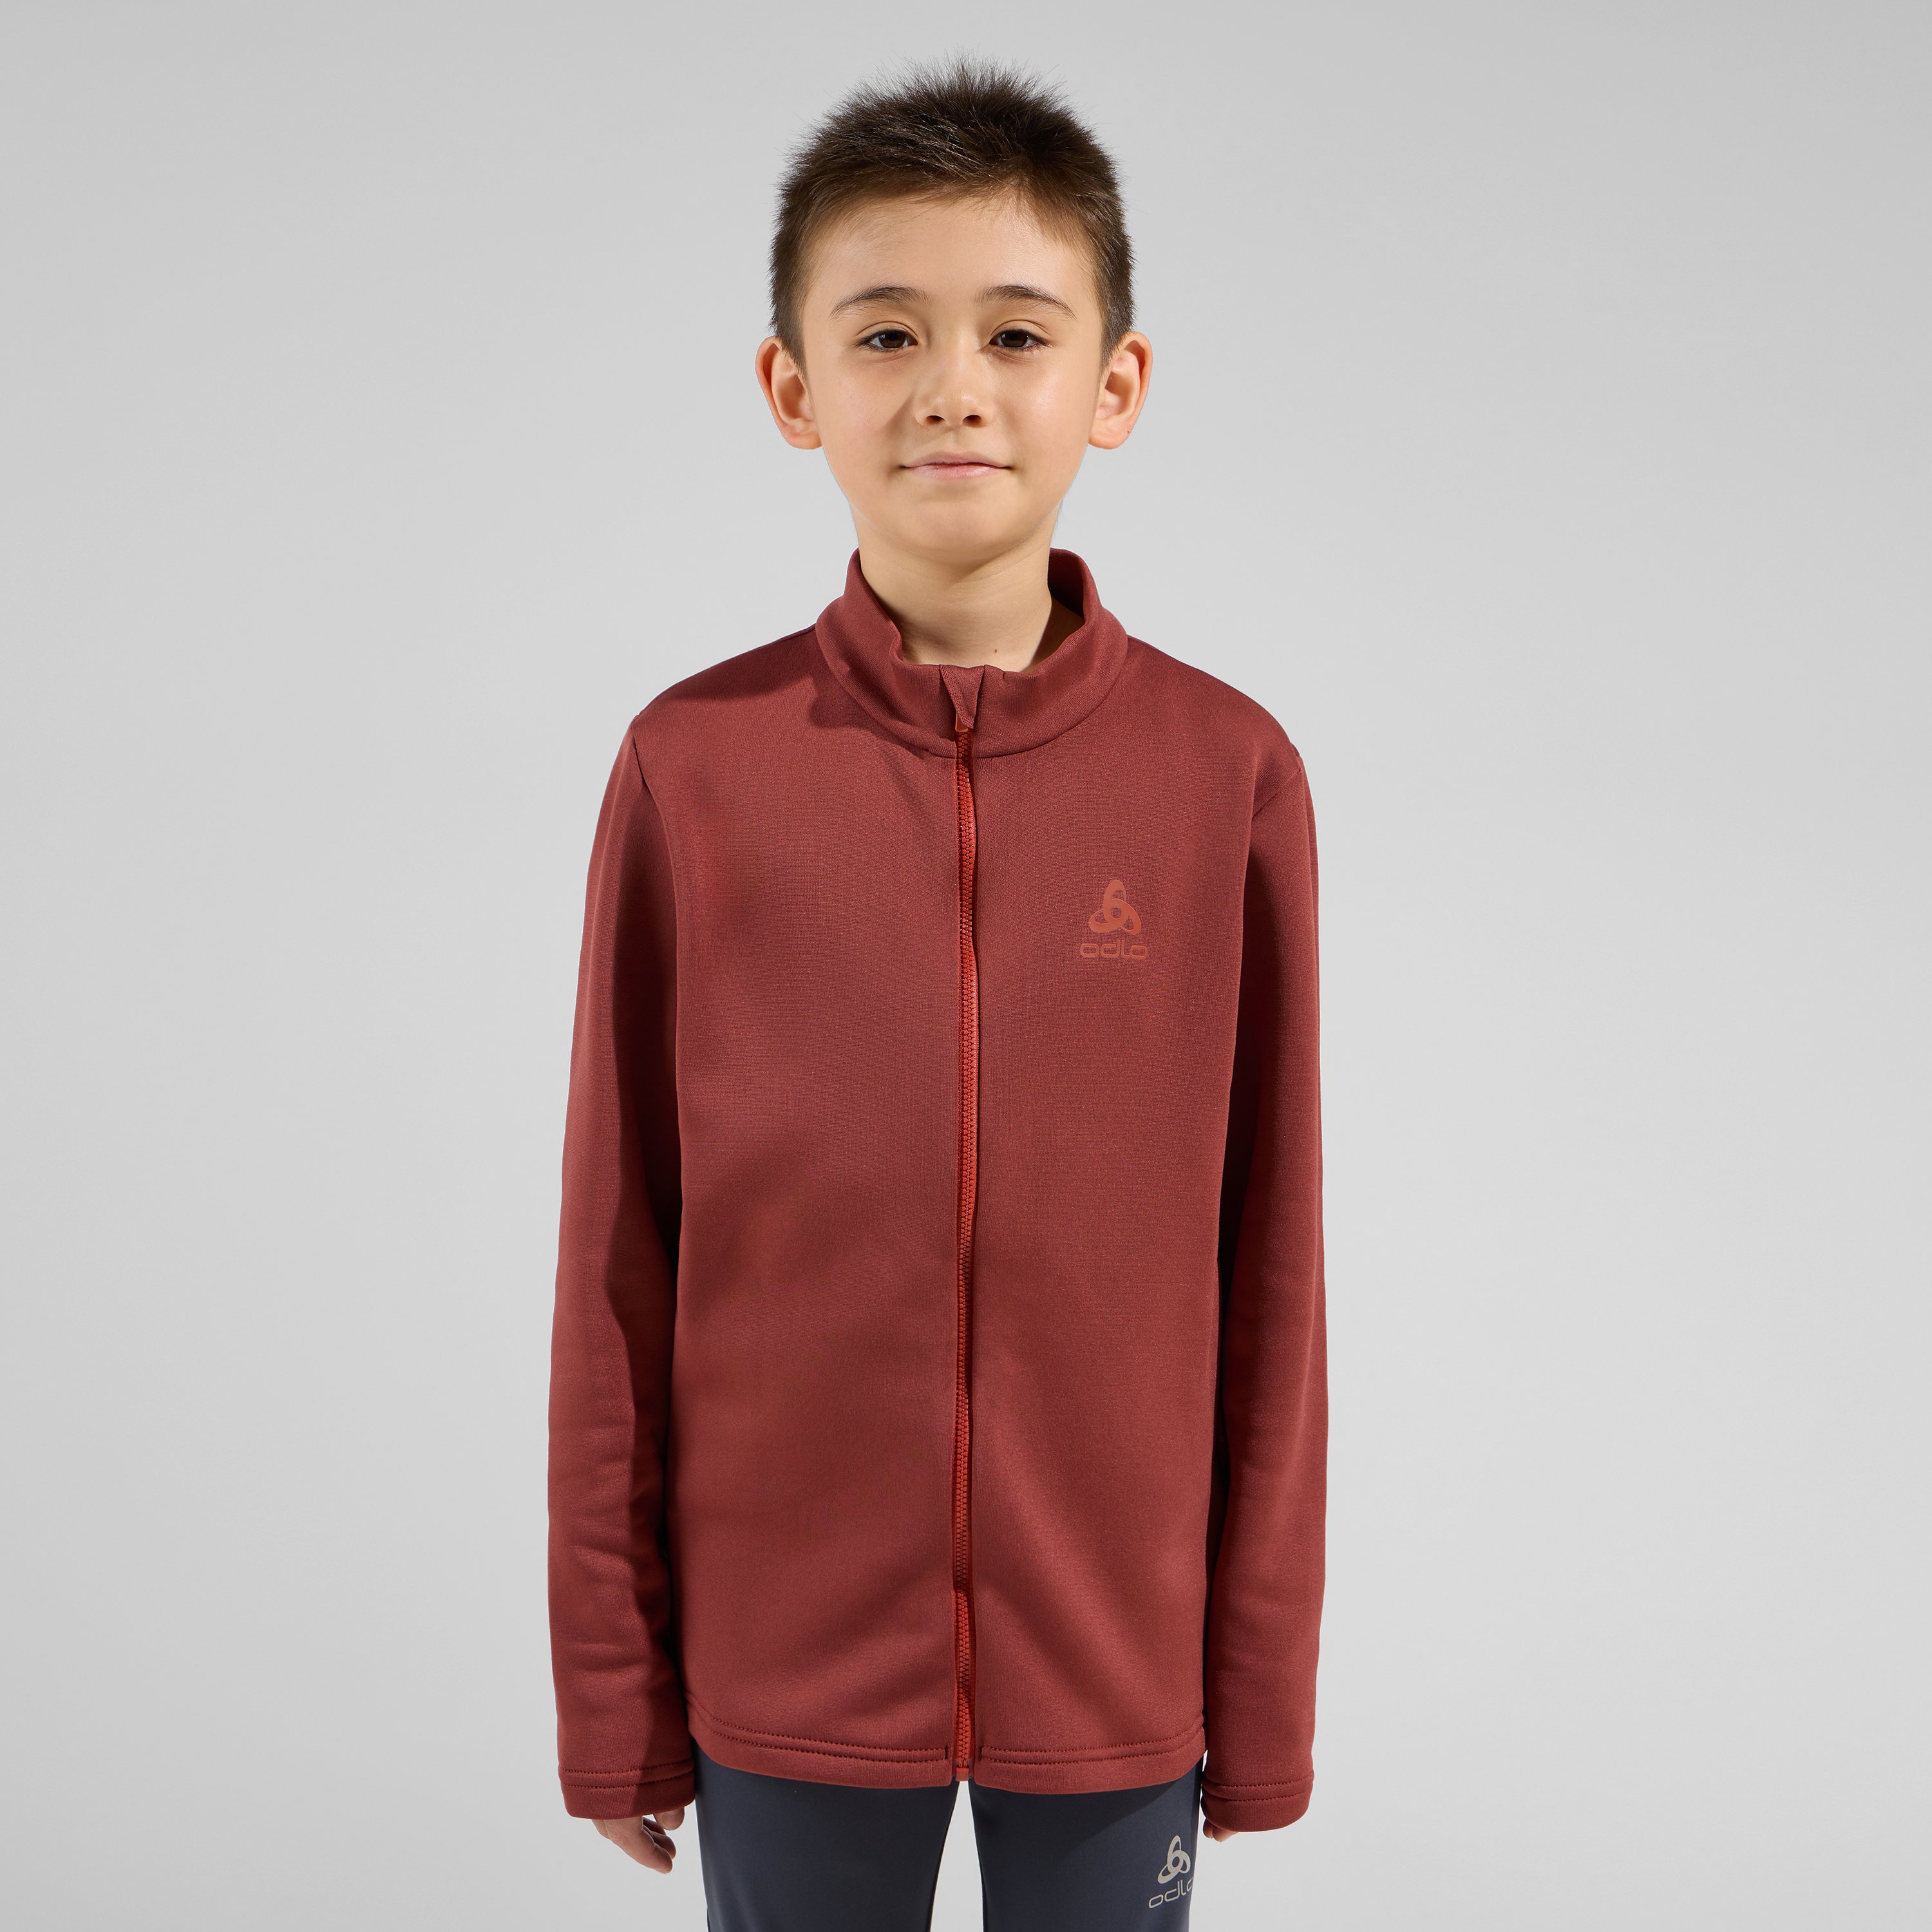 ODLO Berra Mid Layer Jacke für Kinder, 152, rot